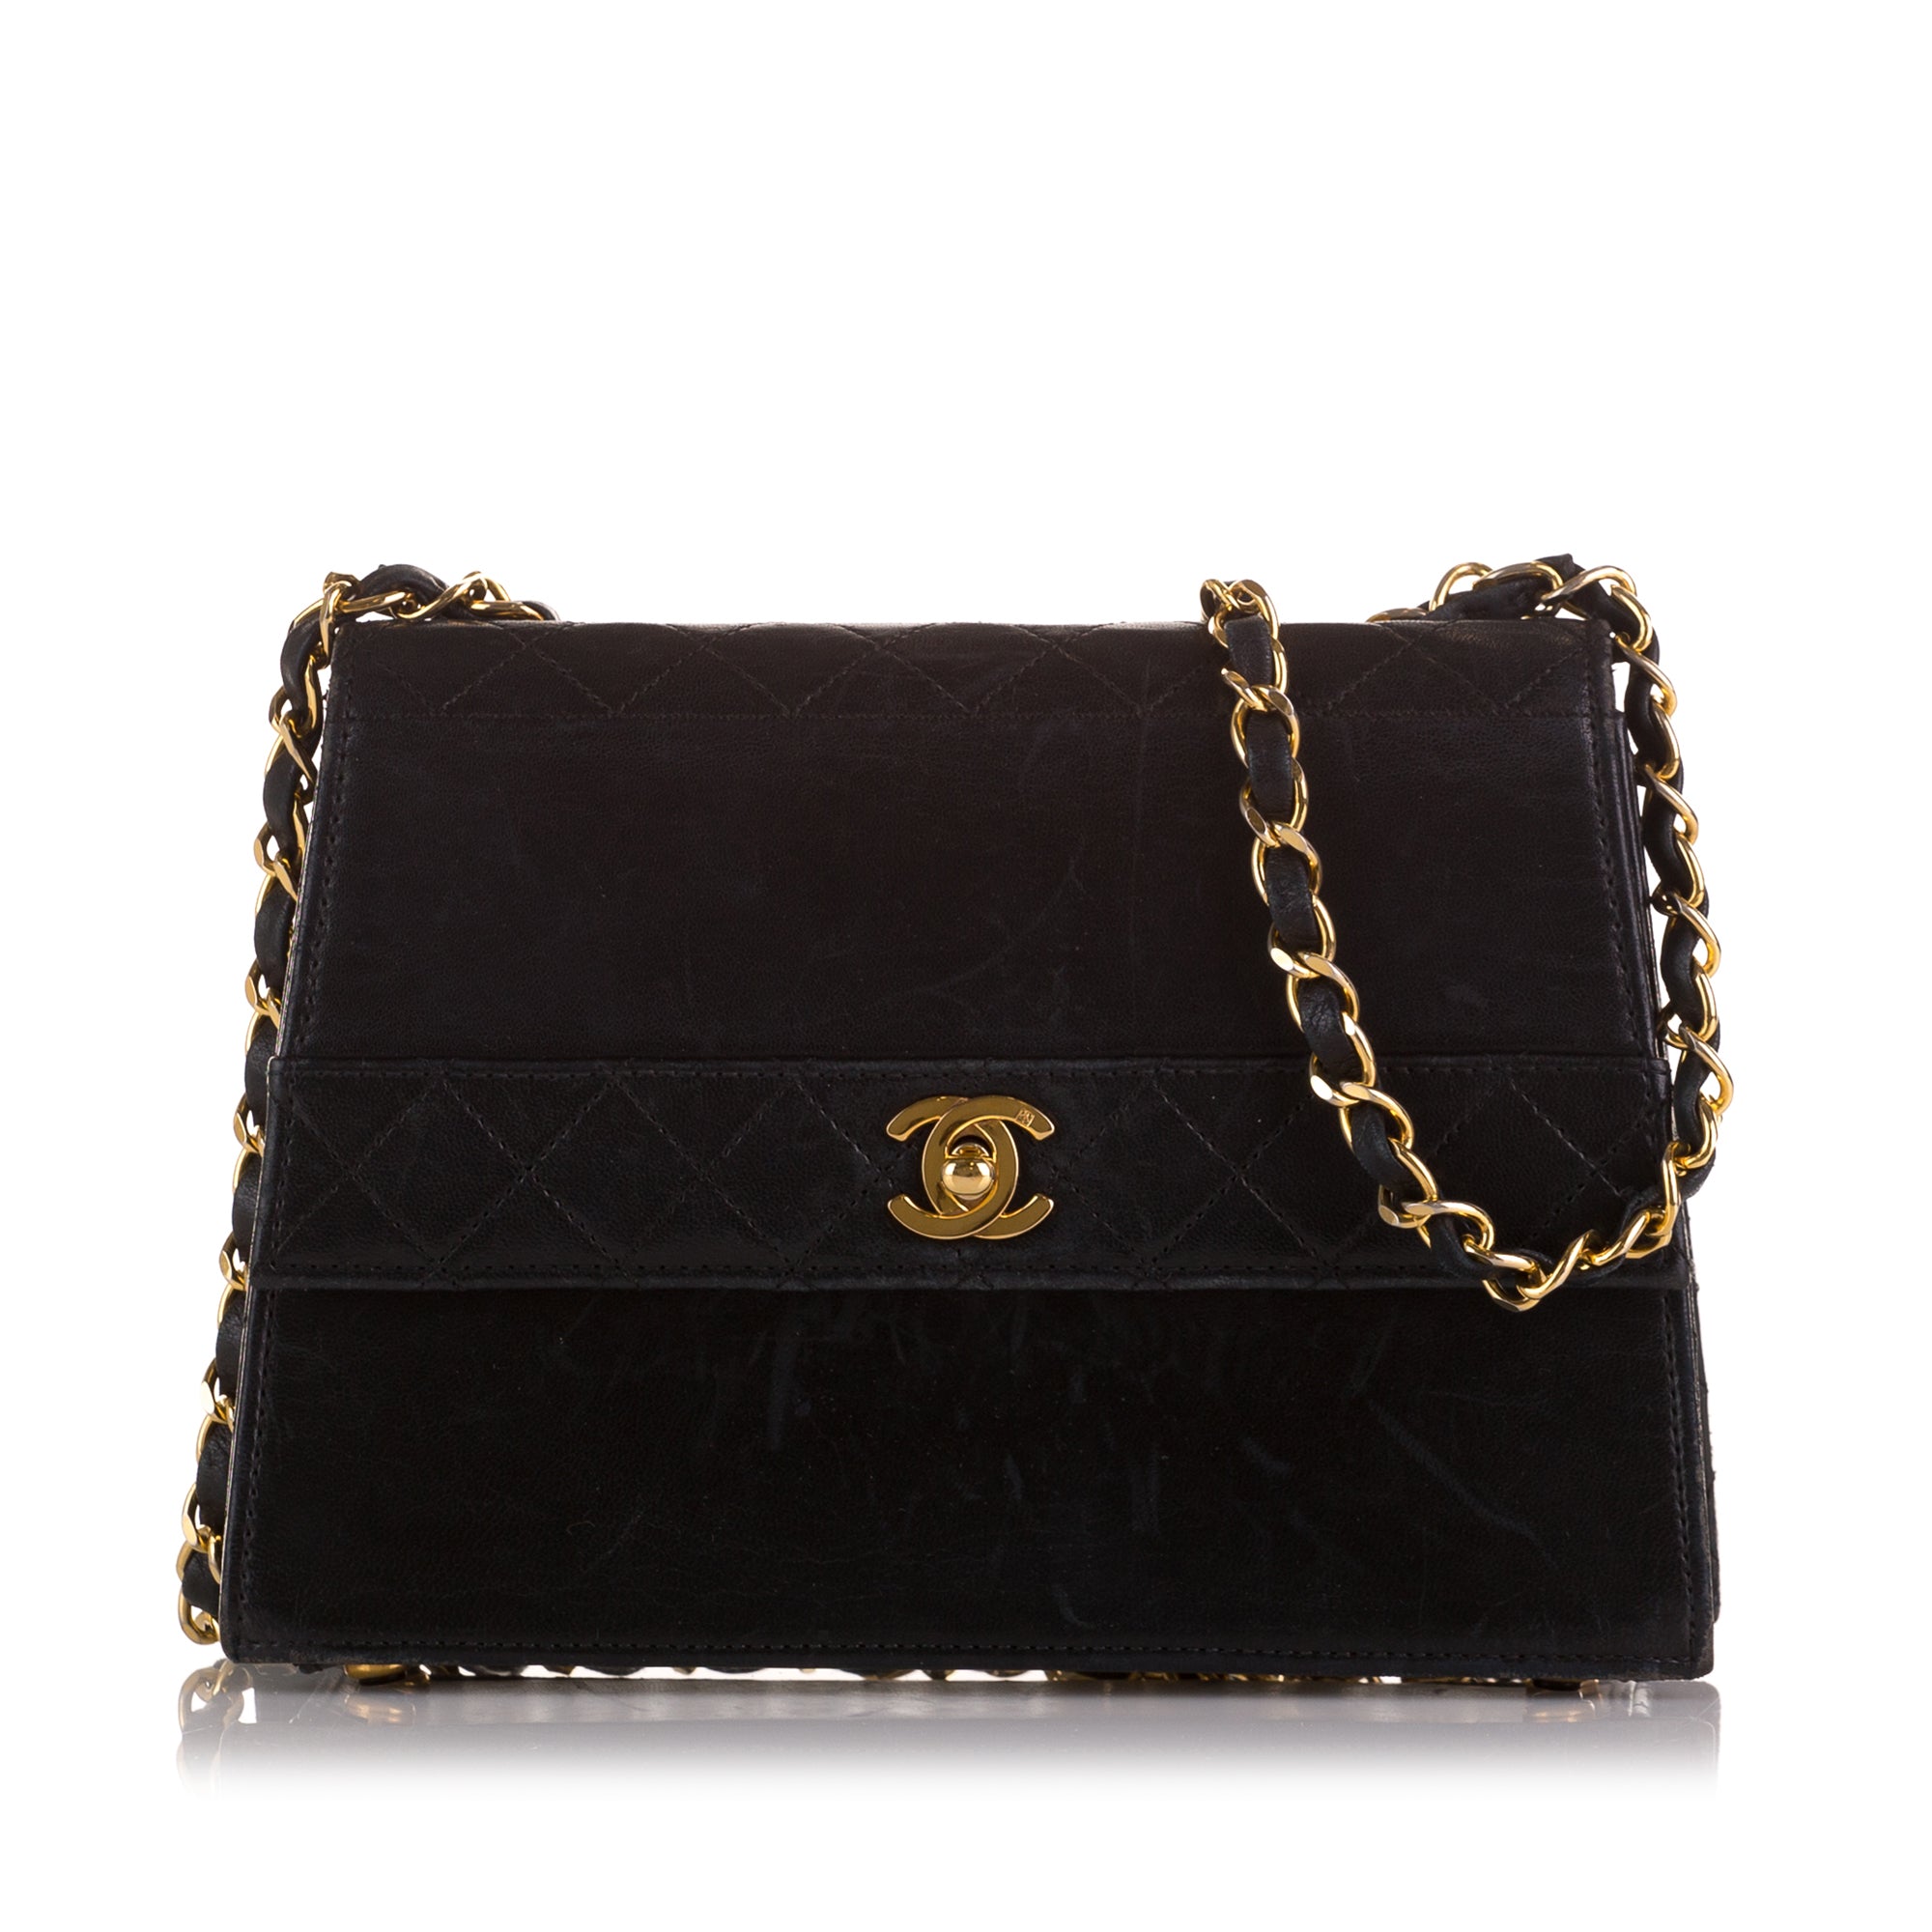 Chanel Timeless Classic Card Slip Case Holder in Black Calfskin - SOLD